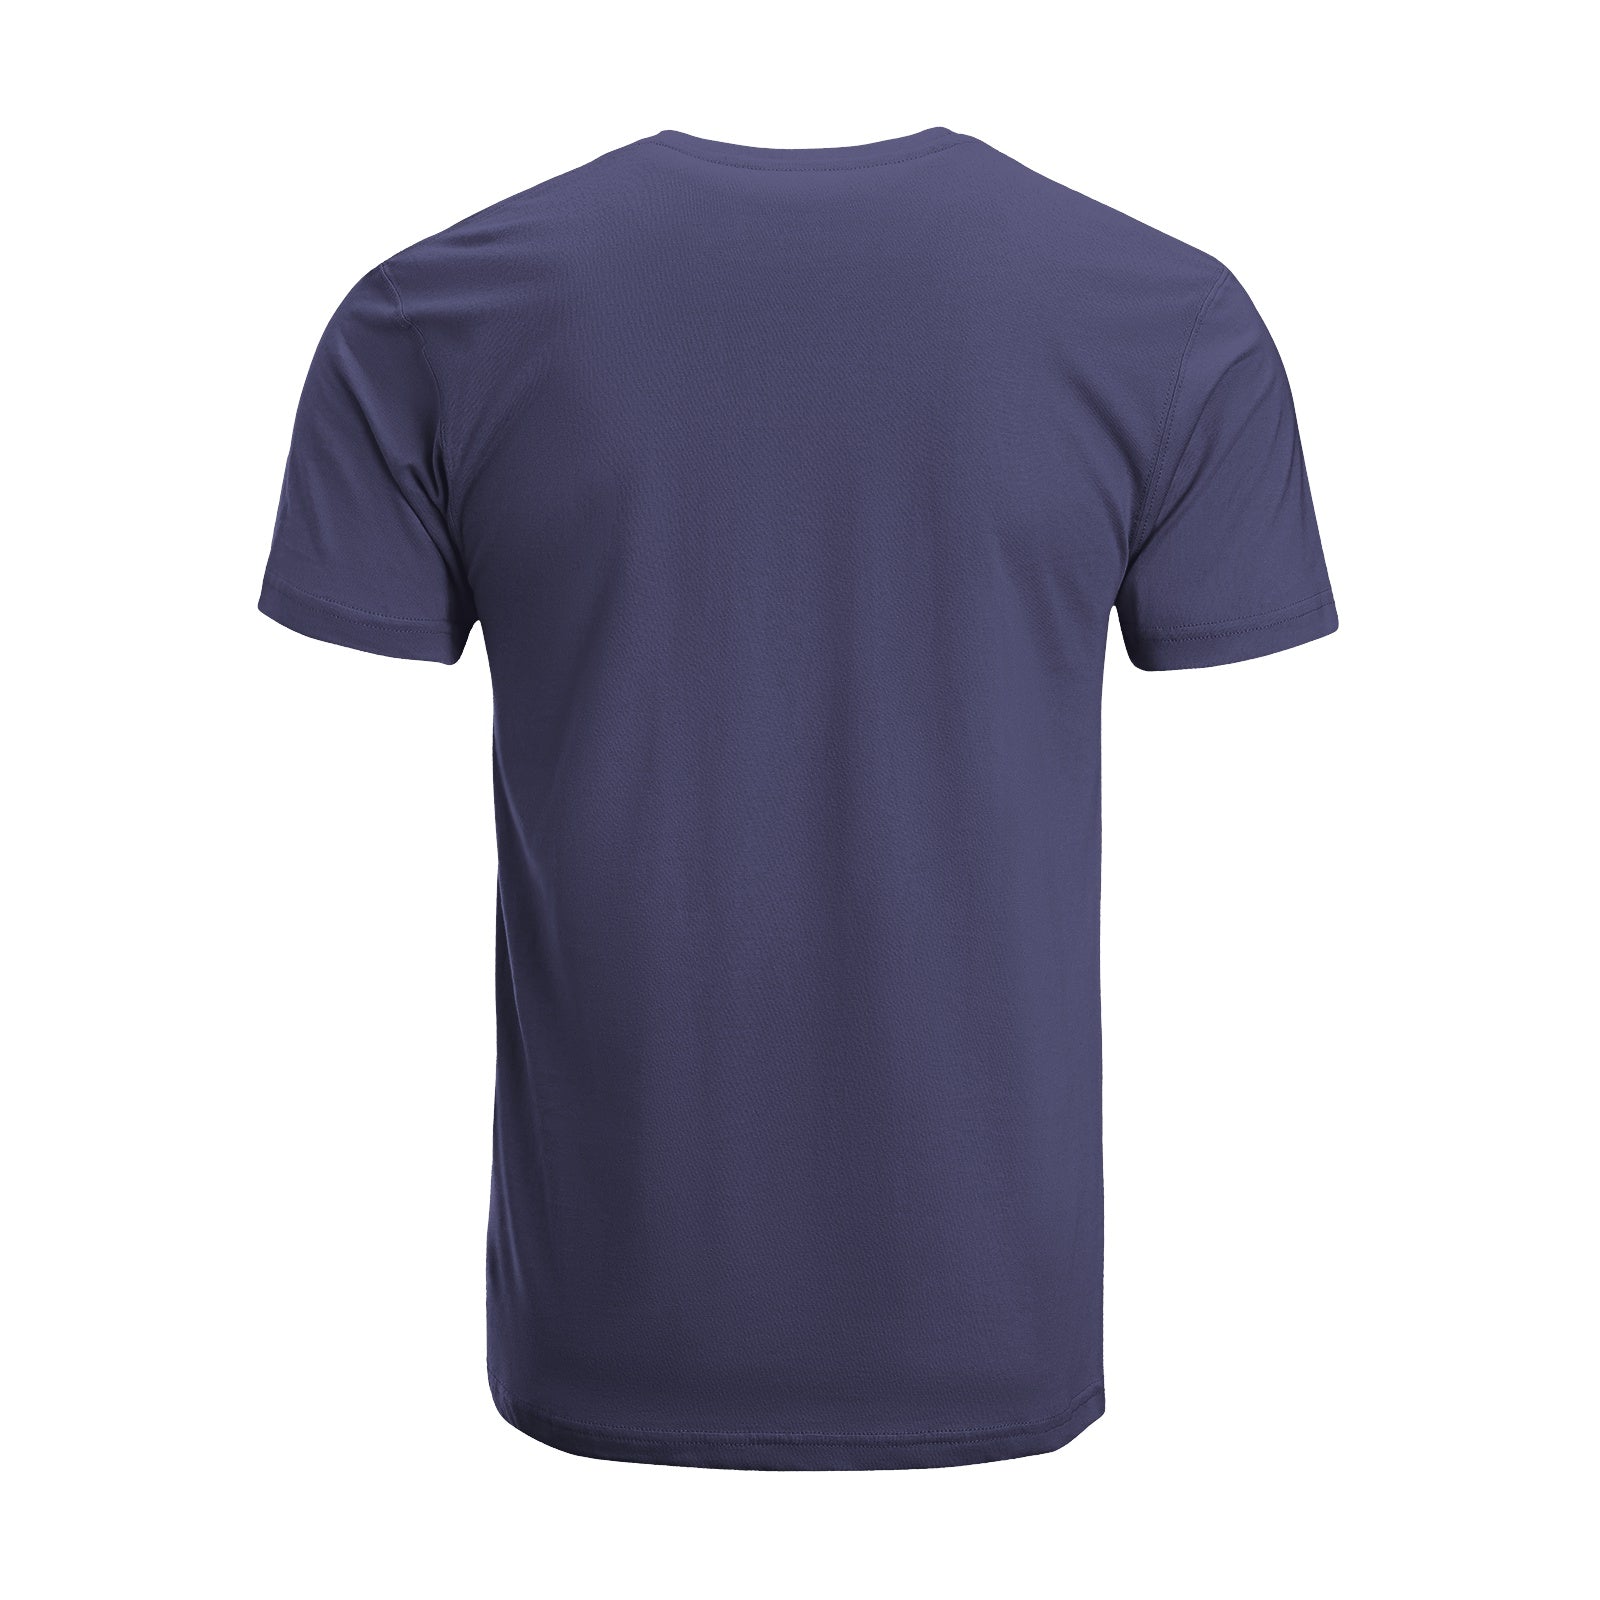 Unisex Short Sleeve Crew Neck Cotton Jersey T-Shirt CAT 13 - Tara-Outfits.com